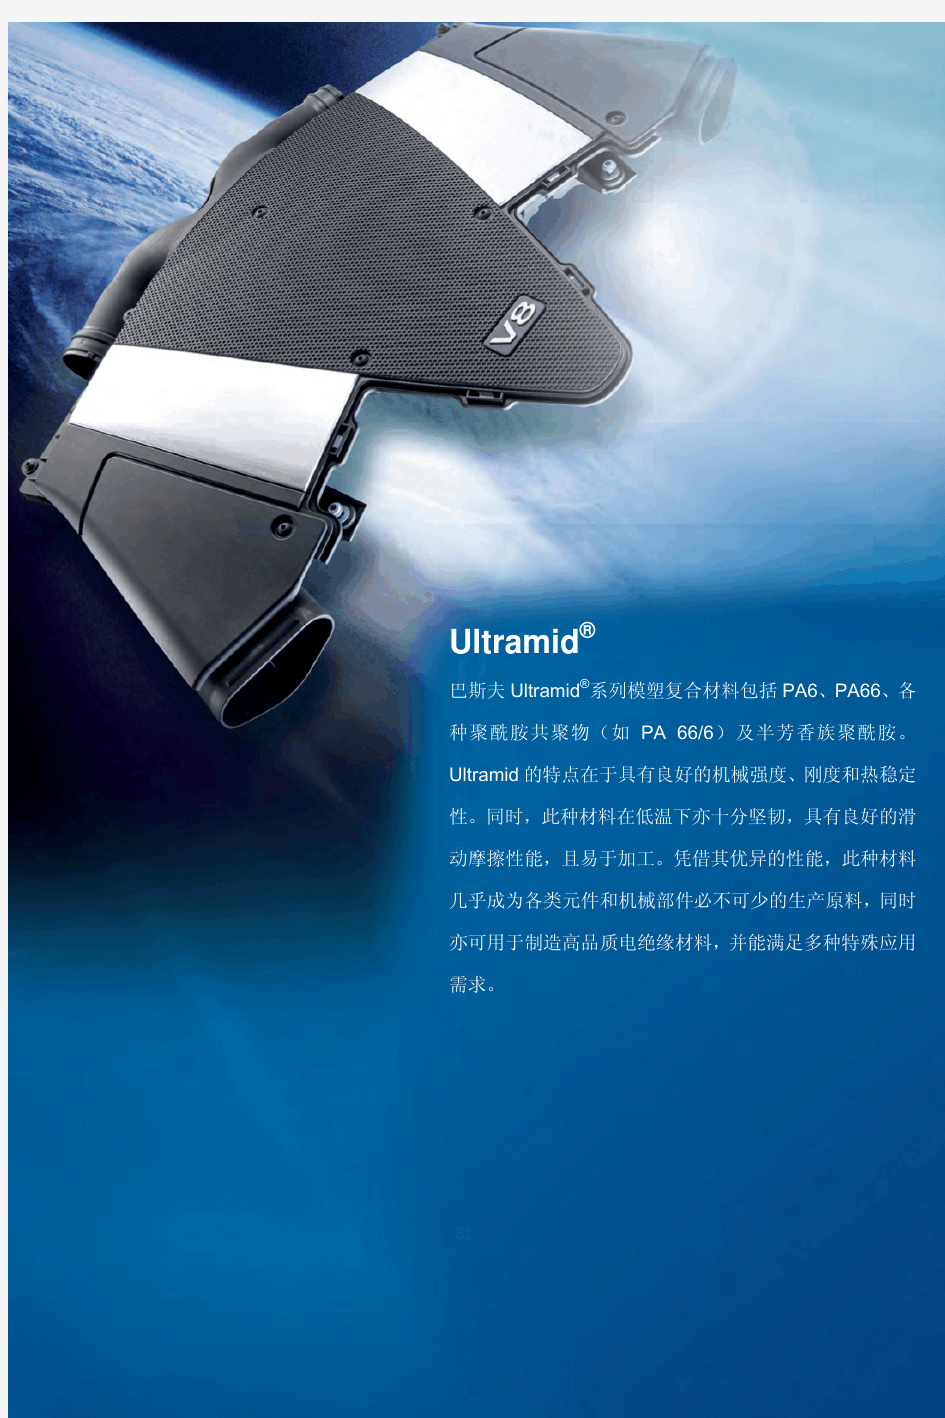 Ultrami(BASFPA)德国巴斯夫的尼龙材料物性与应用